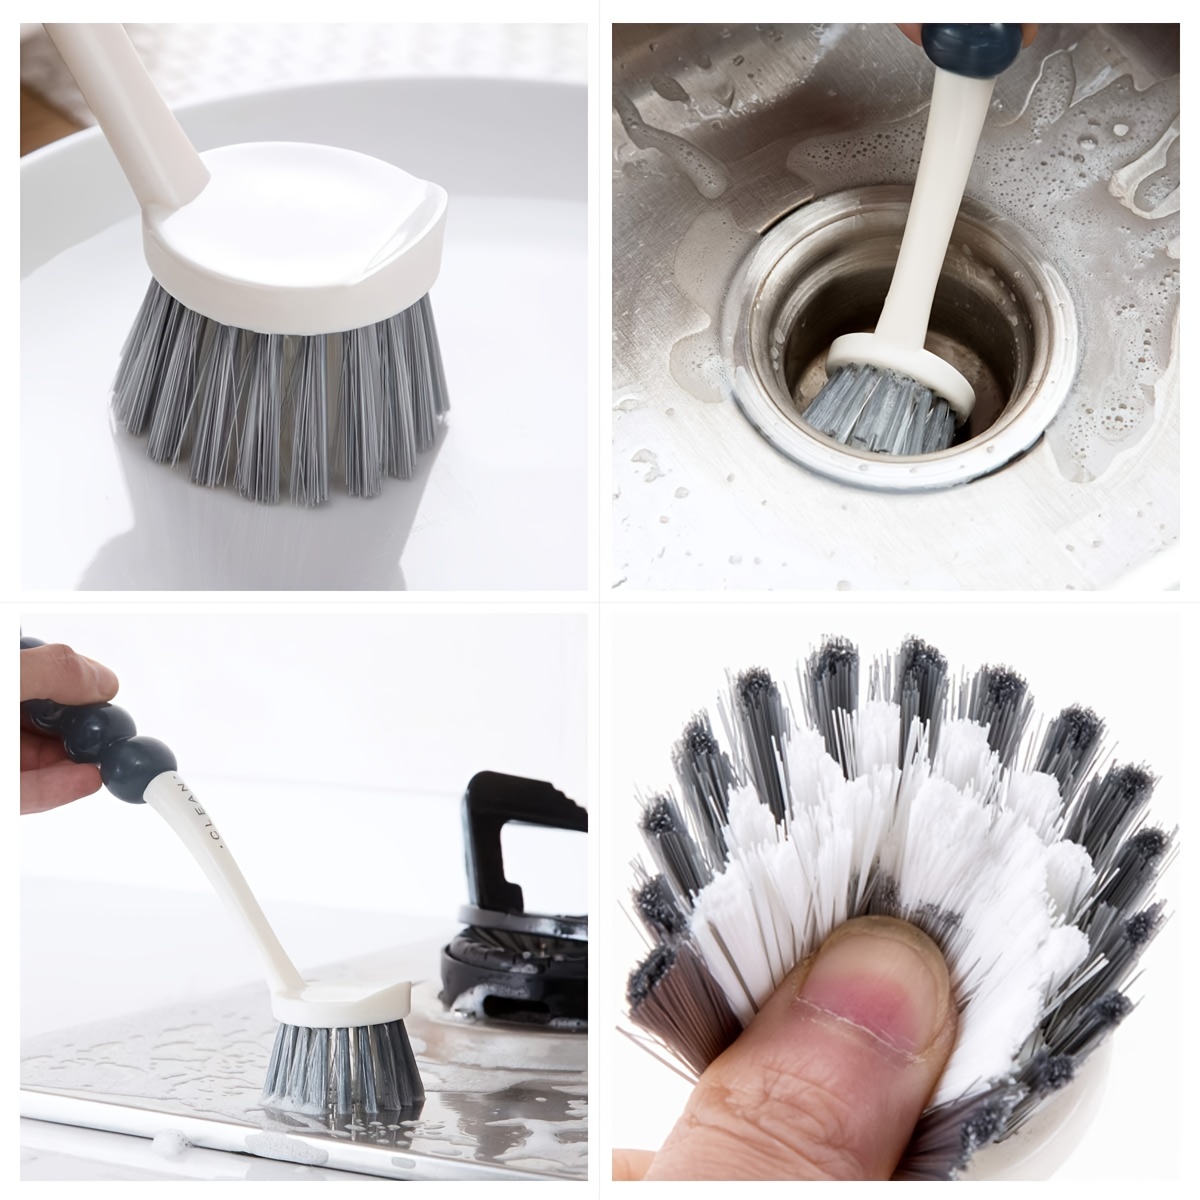 4 cepillos de limpieza pequeños para limpiar botellas, fregadero, cepillo  de cocina, cepillo de limpieza de baño, cepillo de limpieza de puertas